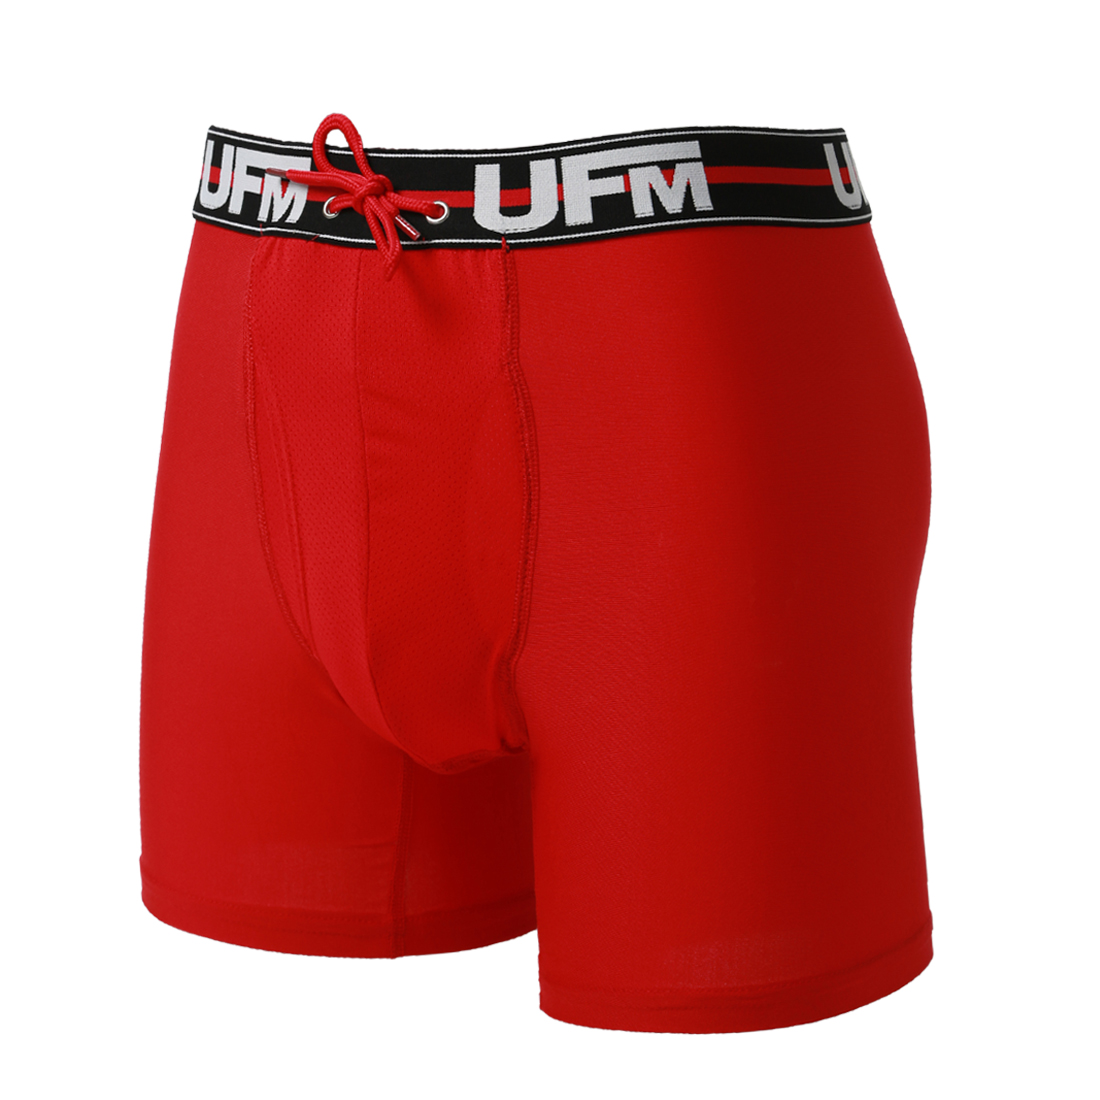 Parent UFM Underwear for Men Everyday Polyester 6 inch Original Max Boxer Brief Red 800